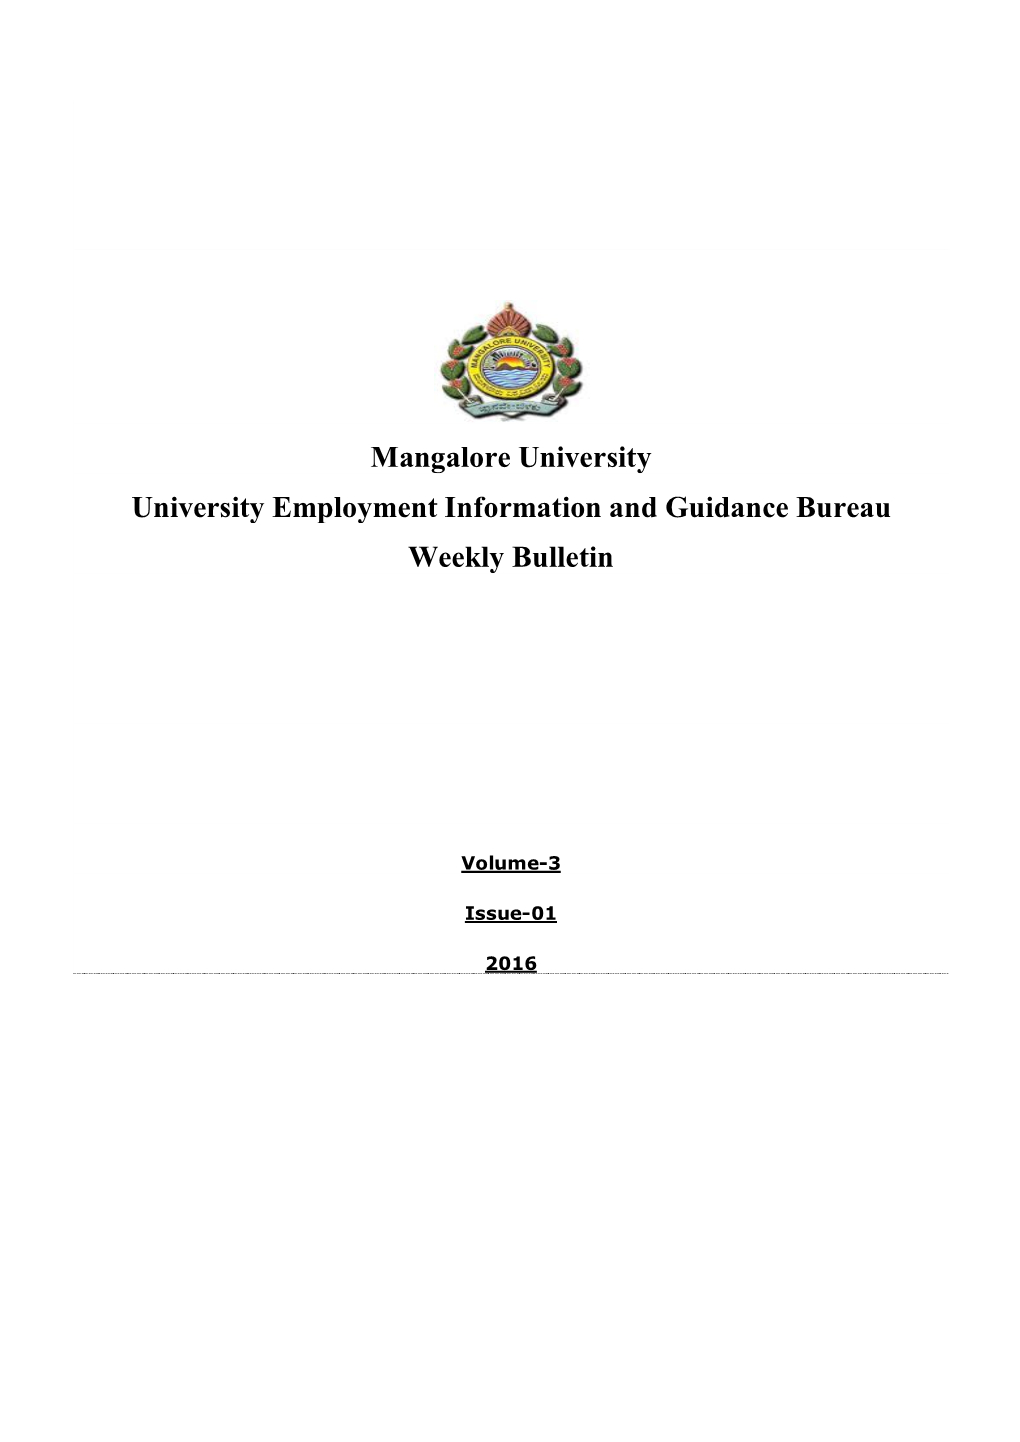 Mangalore University University Employment Information and Guidance Bureau Weekly Bulletin